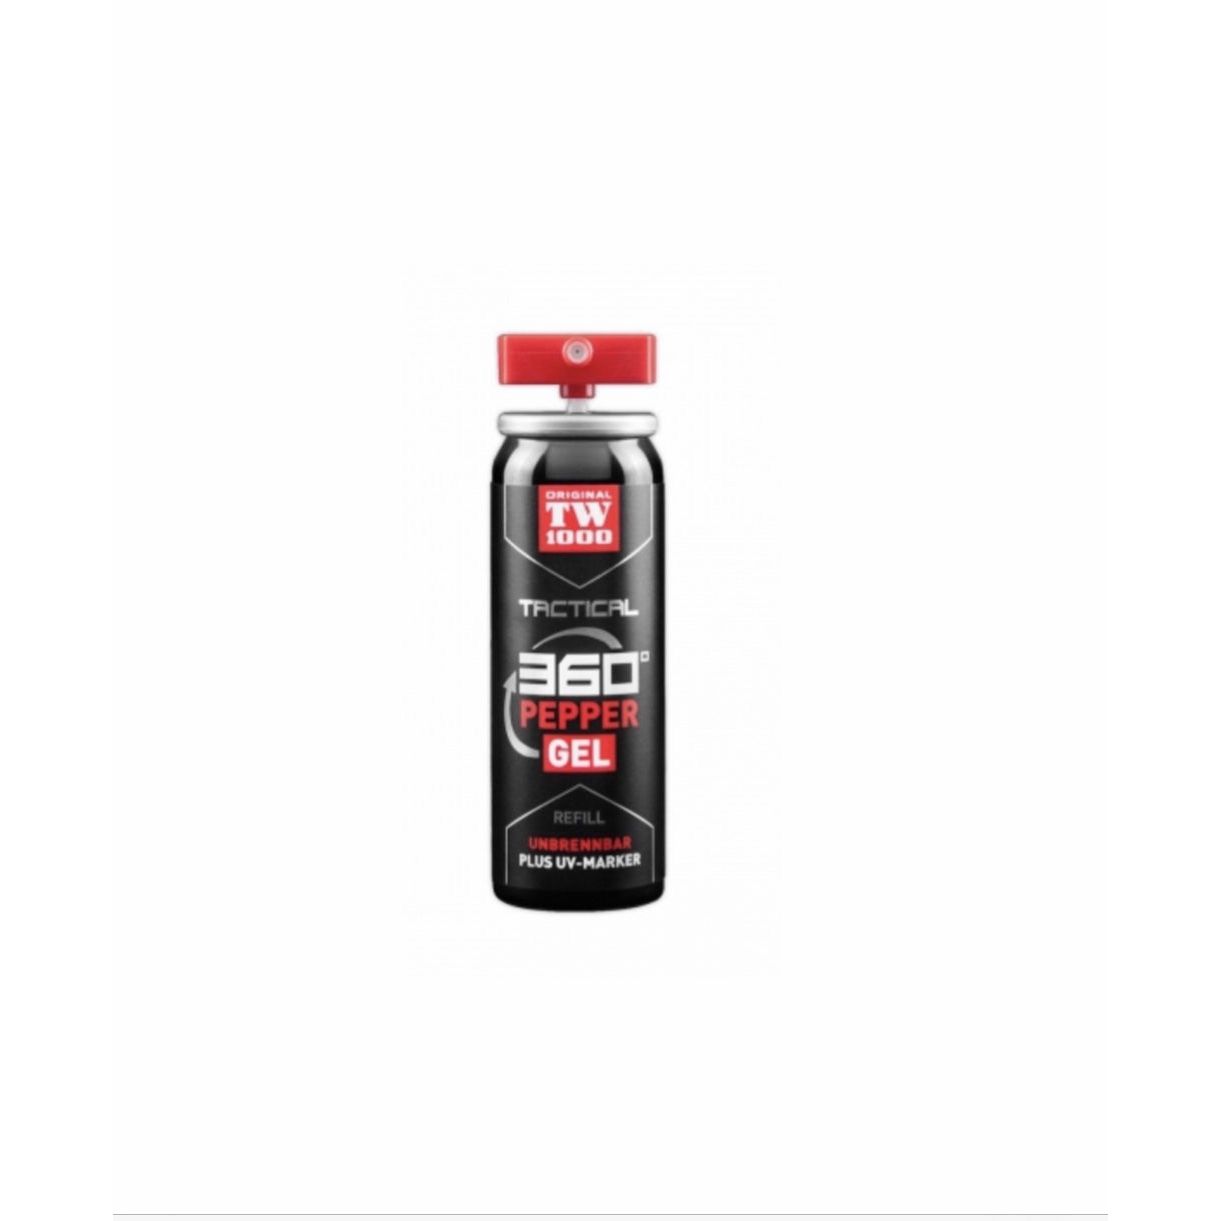 Pepper gel Super Garant Professional replacement cartridge